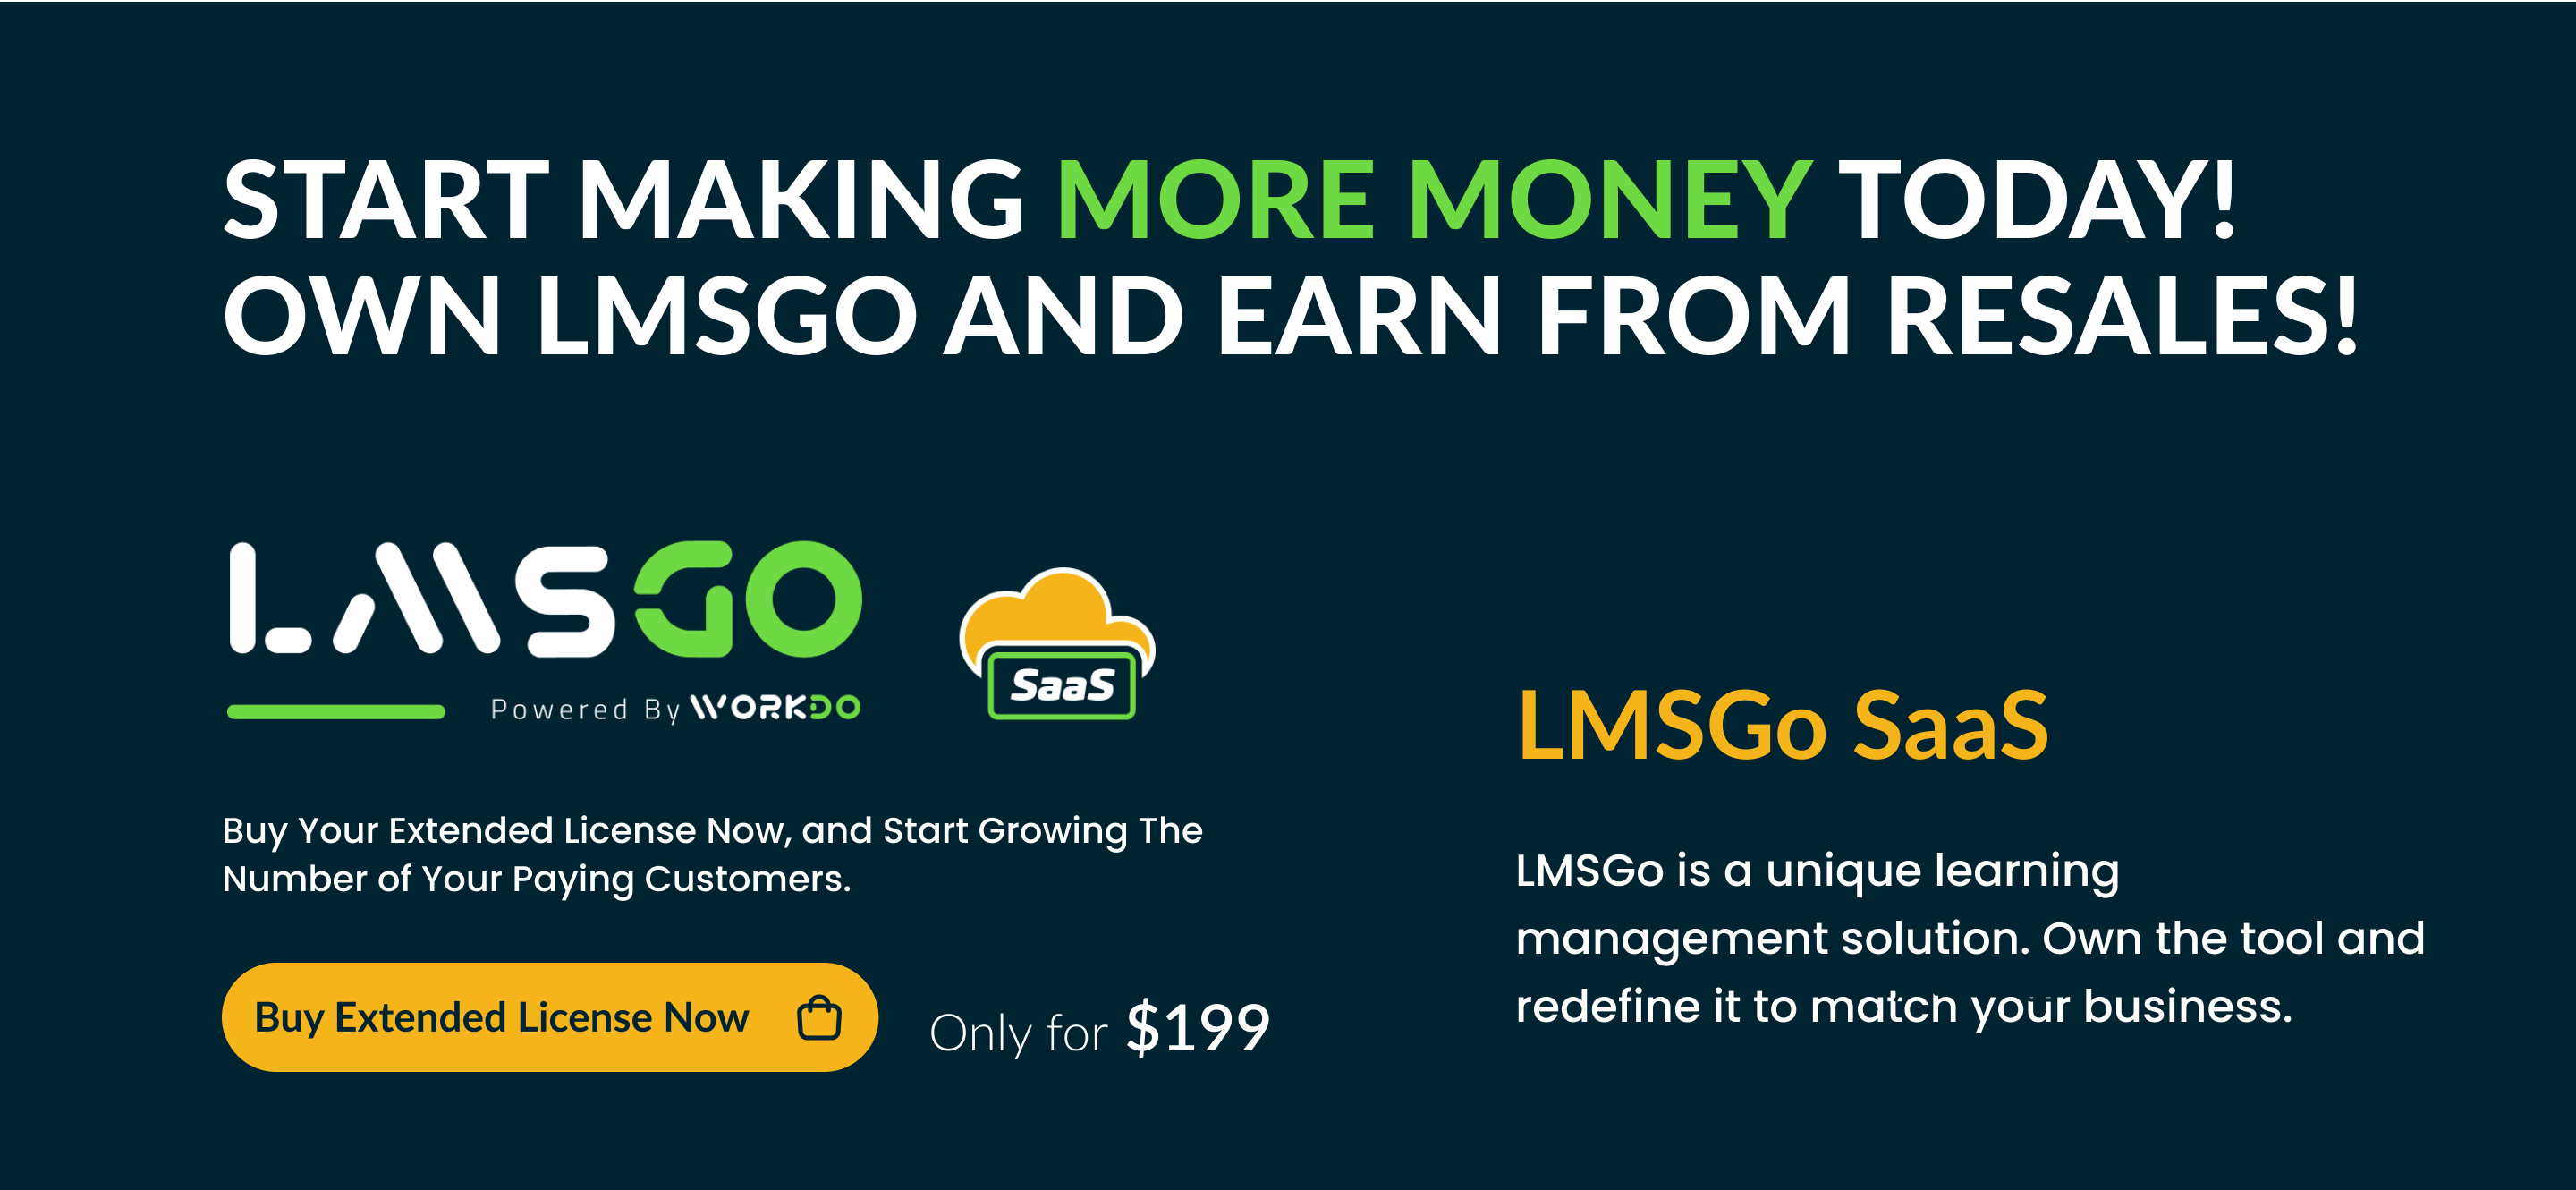 LMSGo SaaS- Learning Management System - 10